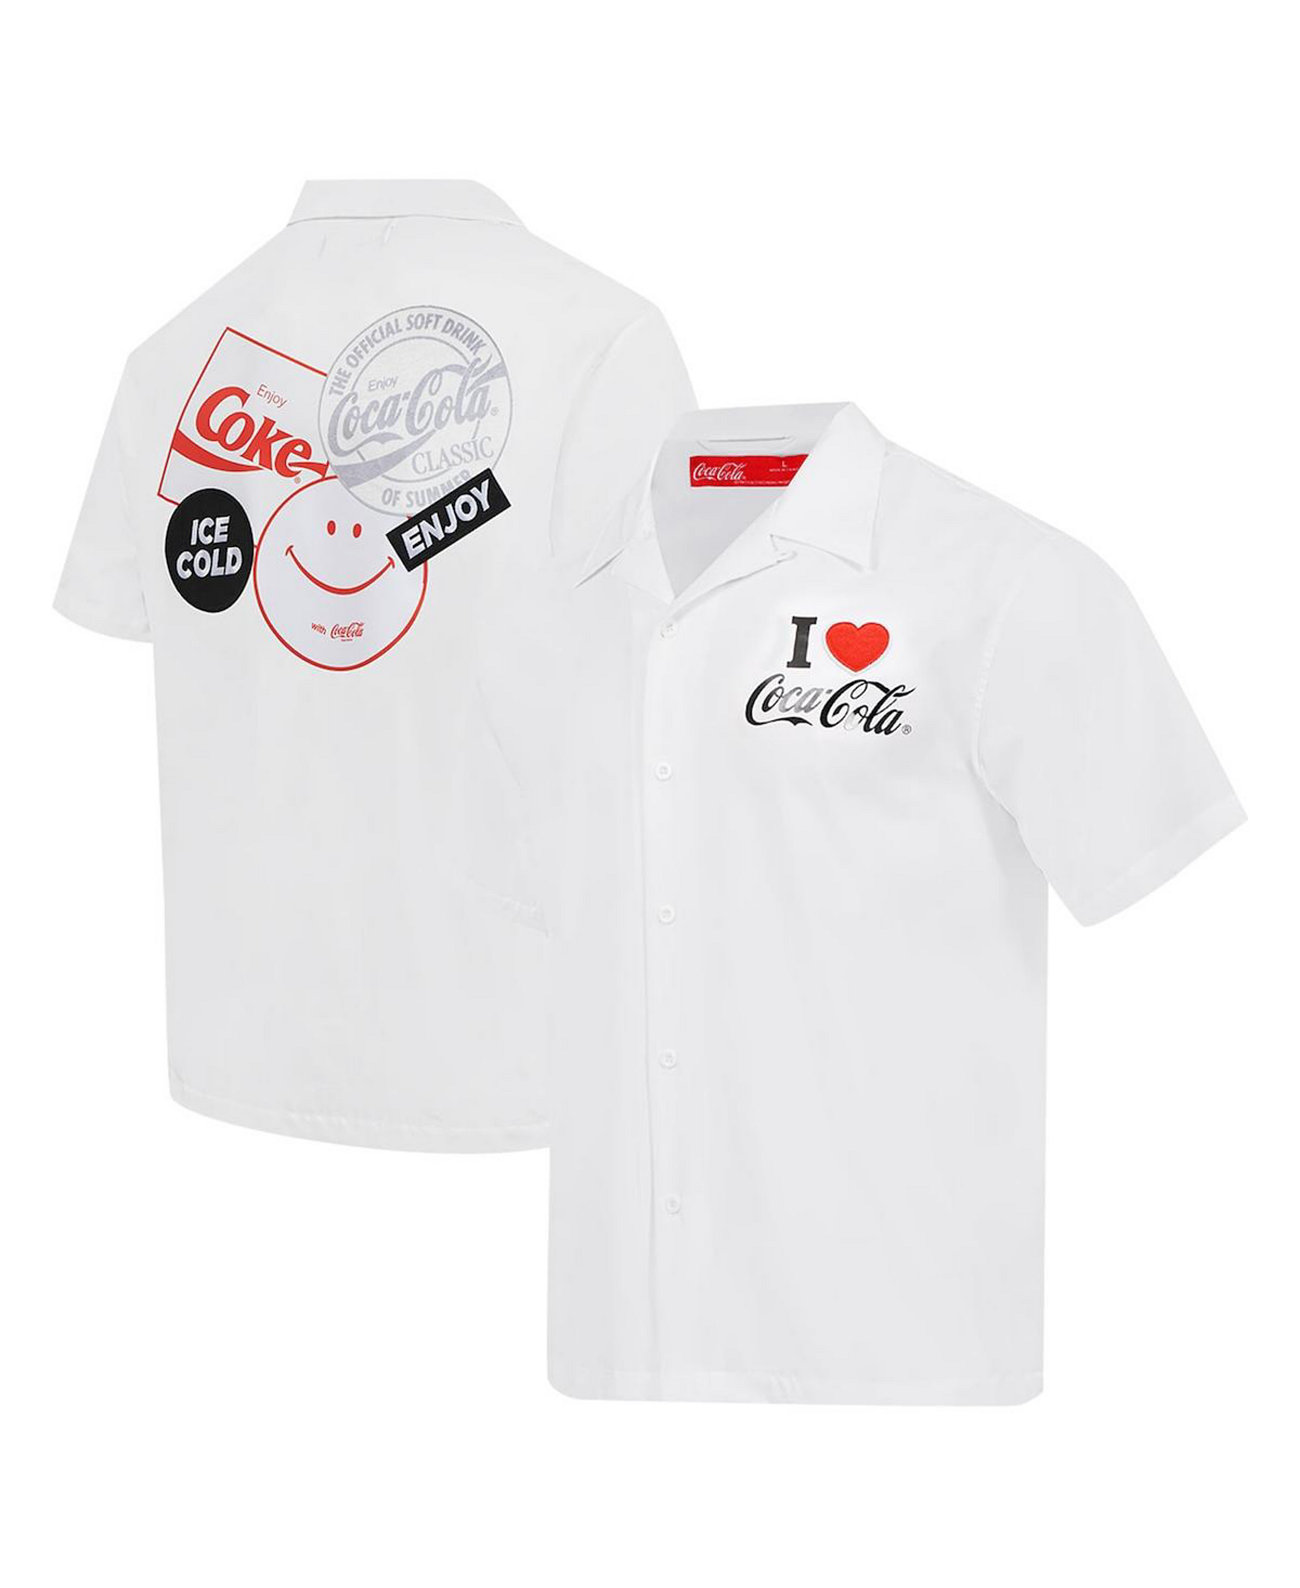 Men's Coca-Cola Ice Cold Coke Button-Up Shirt Freeze Max